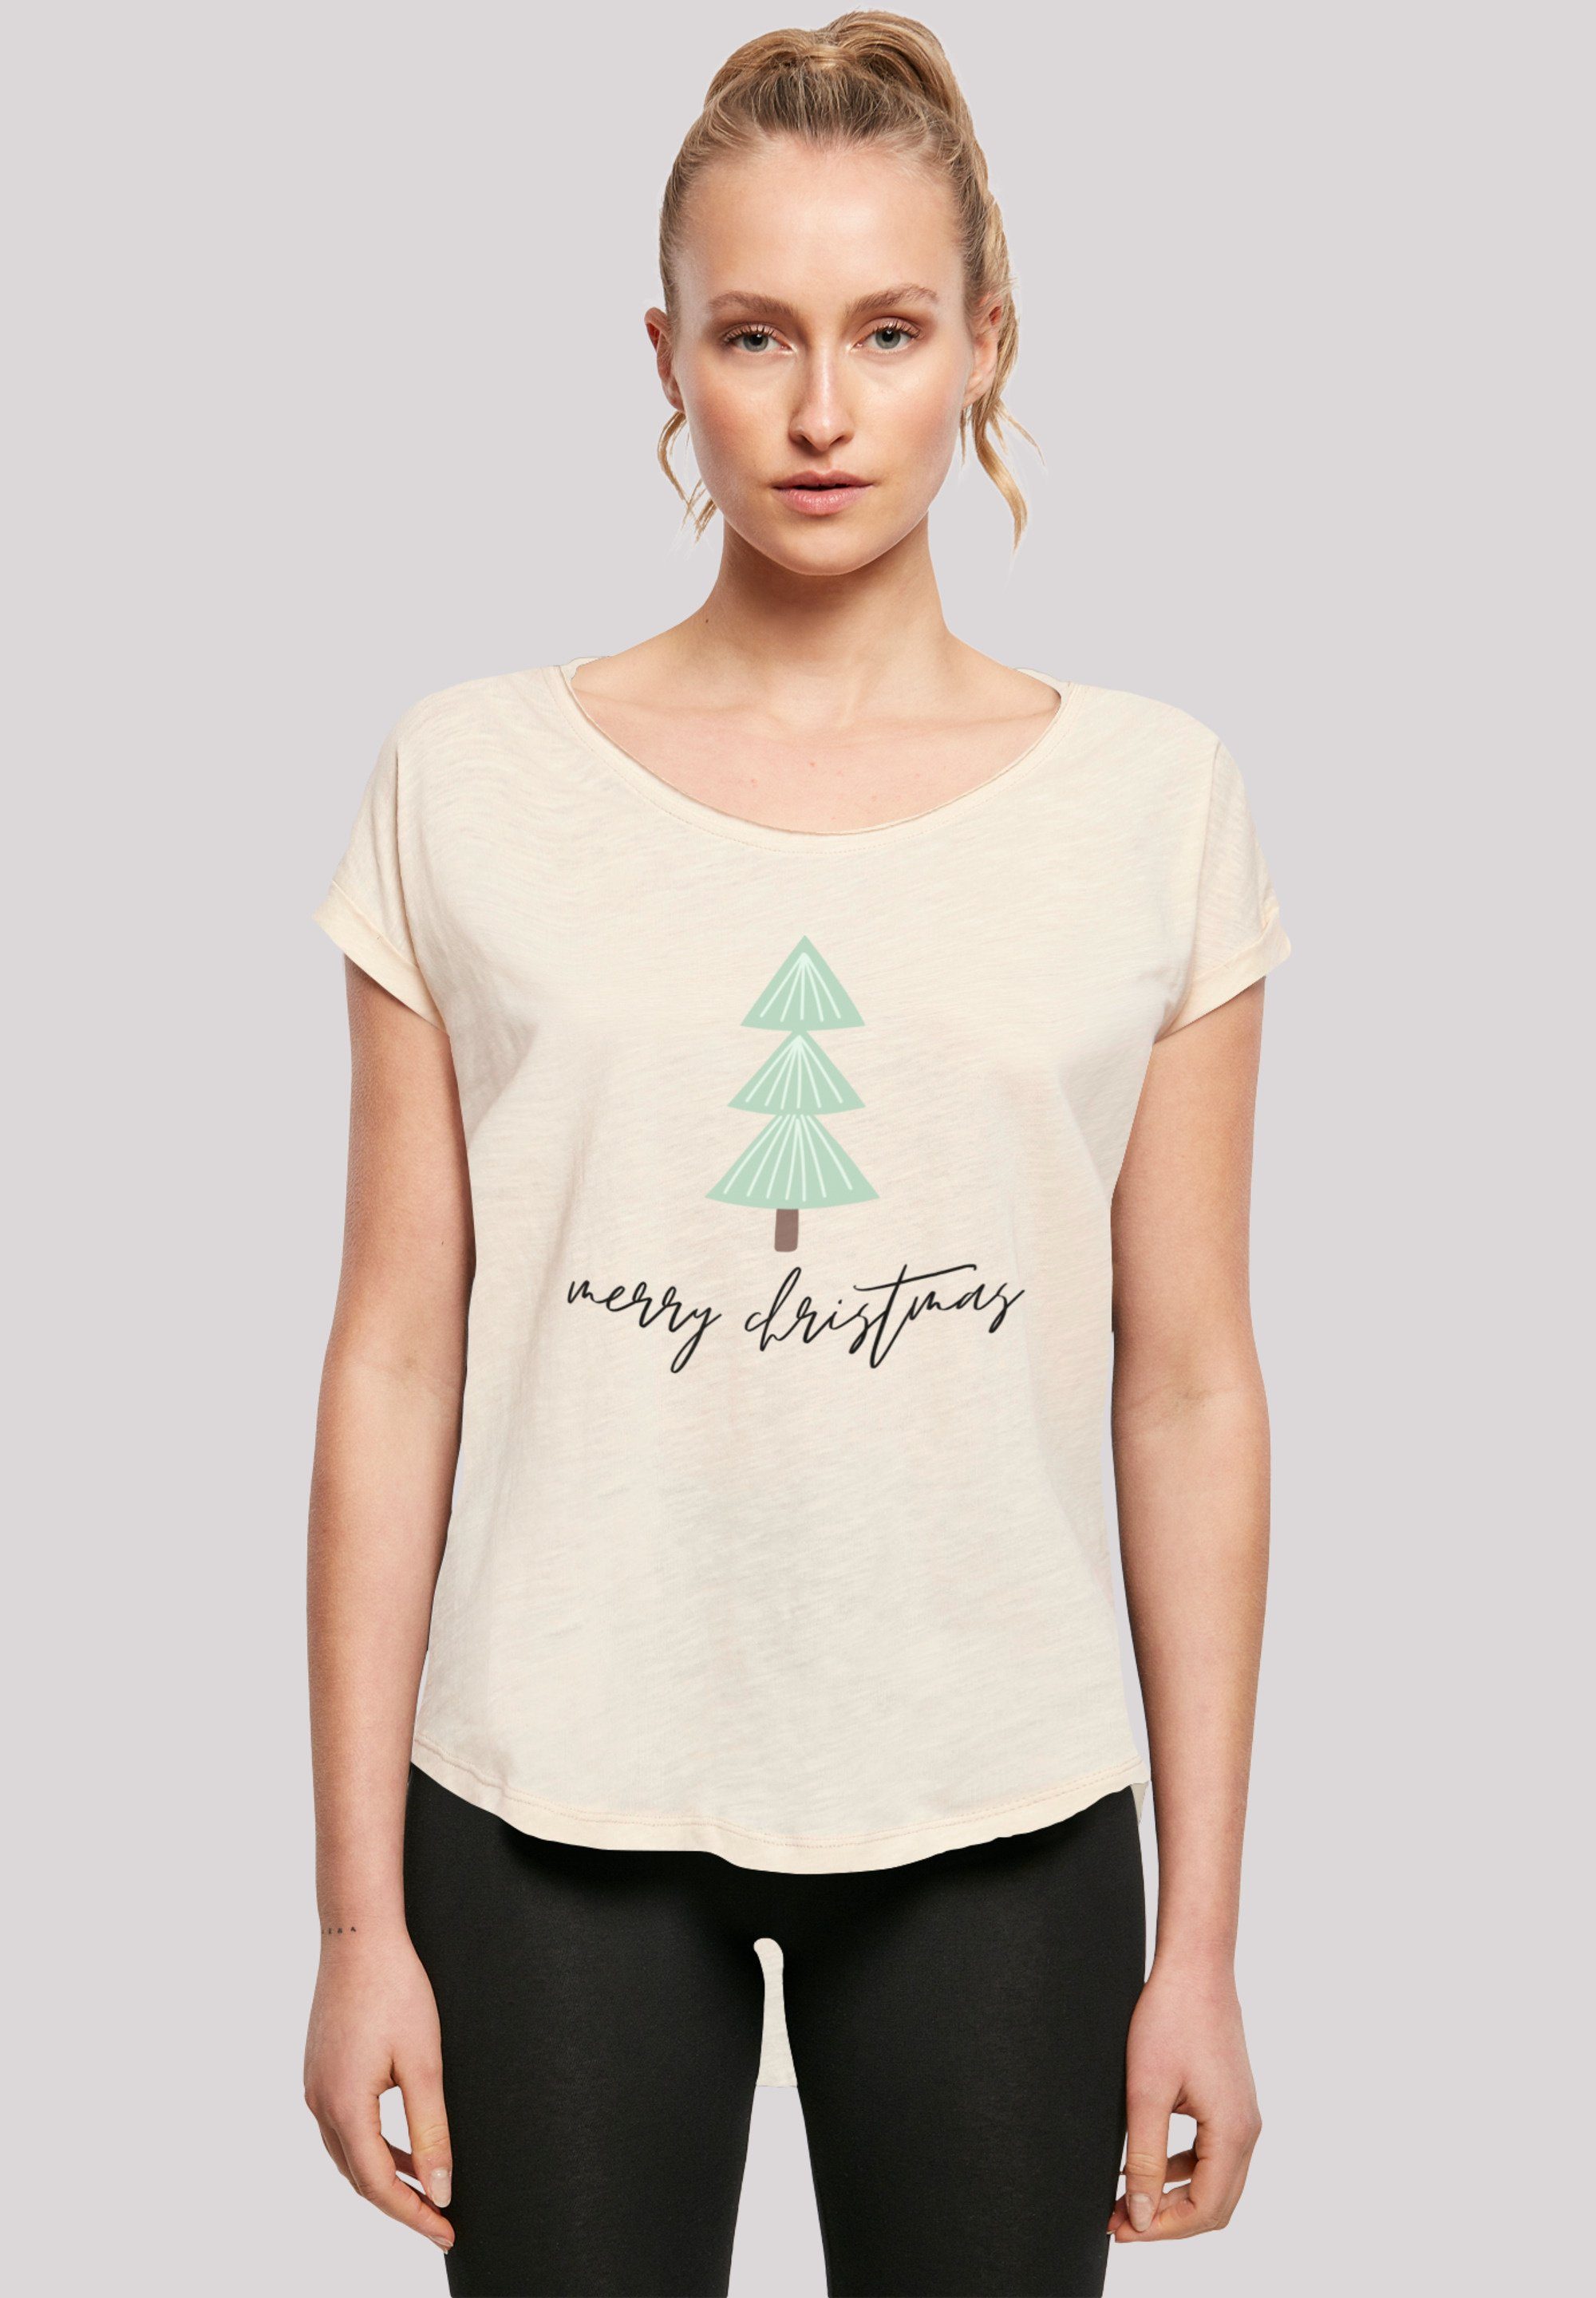 Merry Whitesand T-Shirt F4NT4STIC Weihnachten Christmas Print